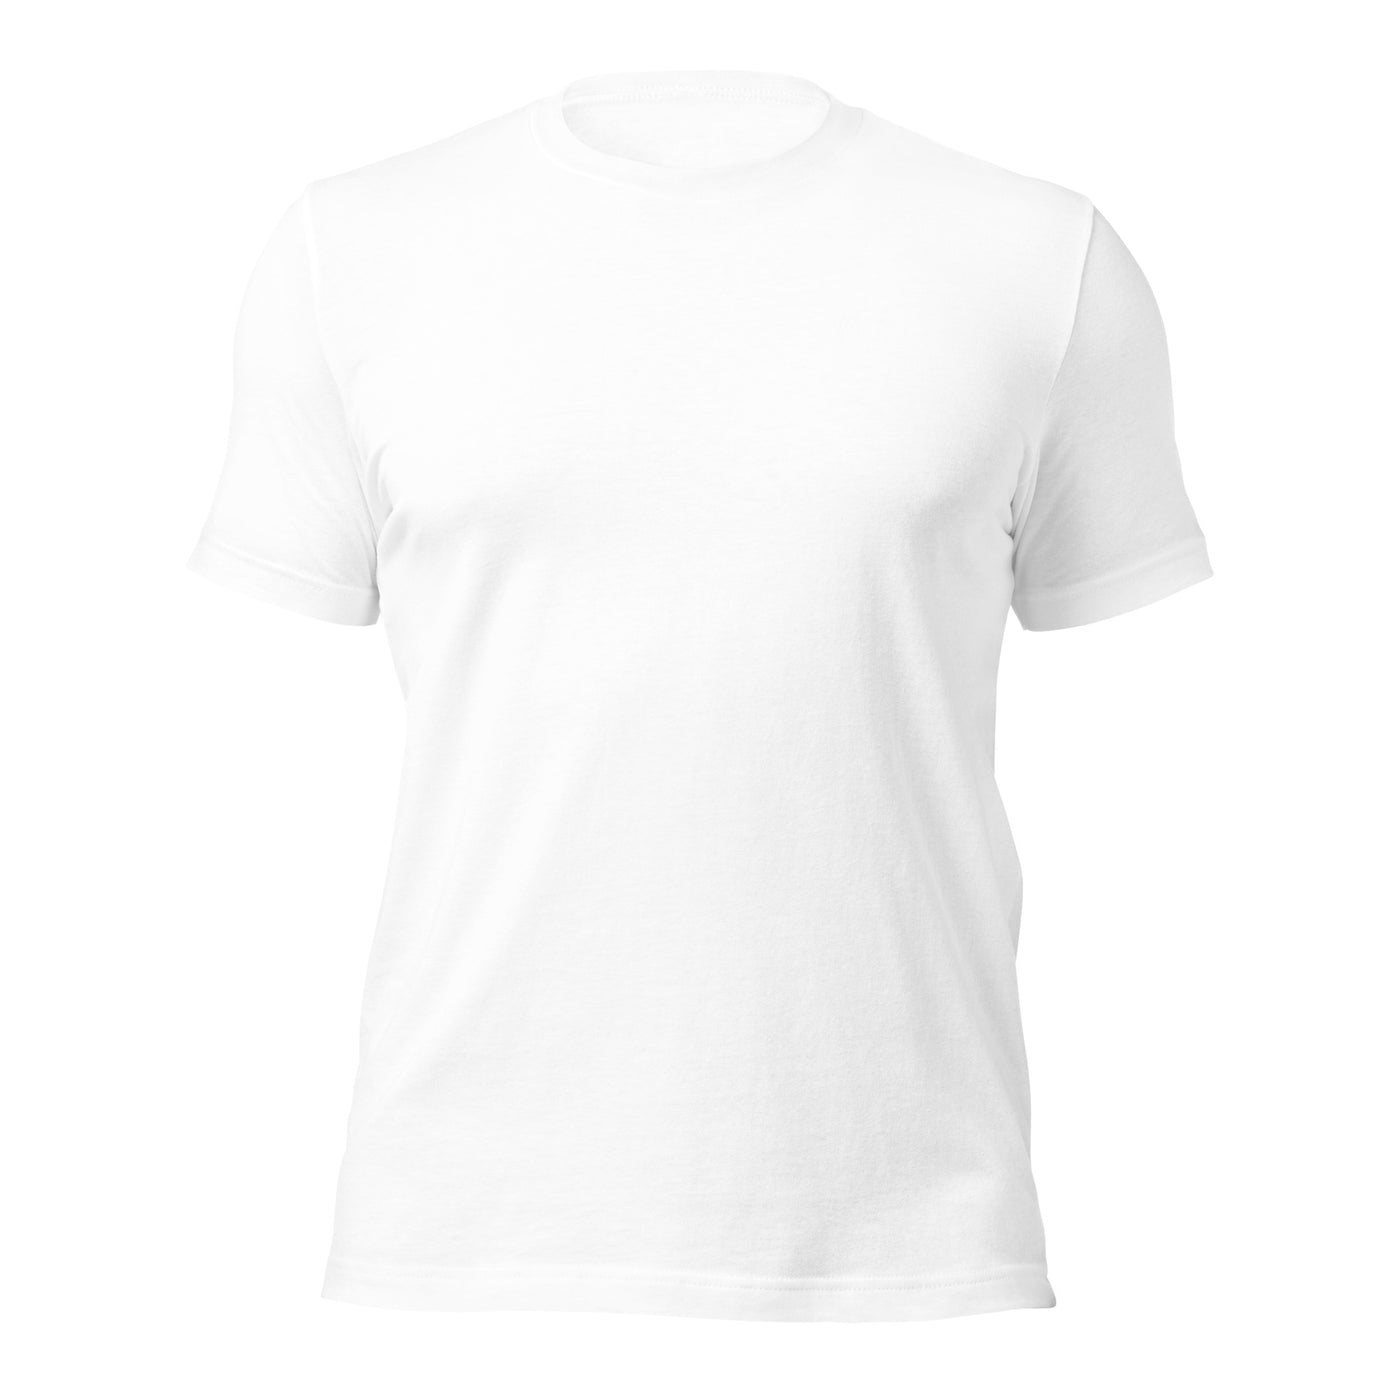 I am not always rude and sarcastic: Sometimes, I am asleep - Unisex t-shirt ( Back Print )